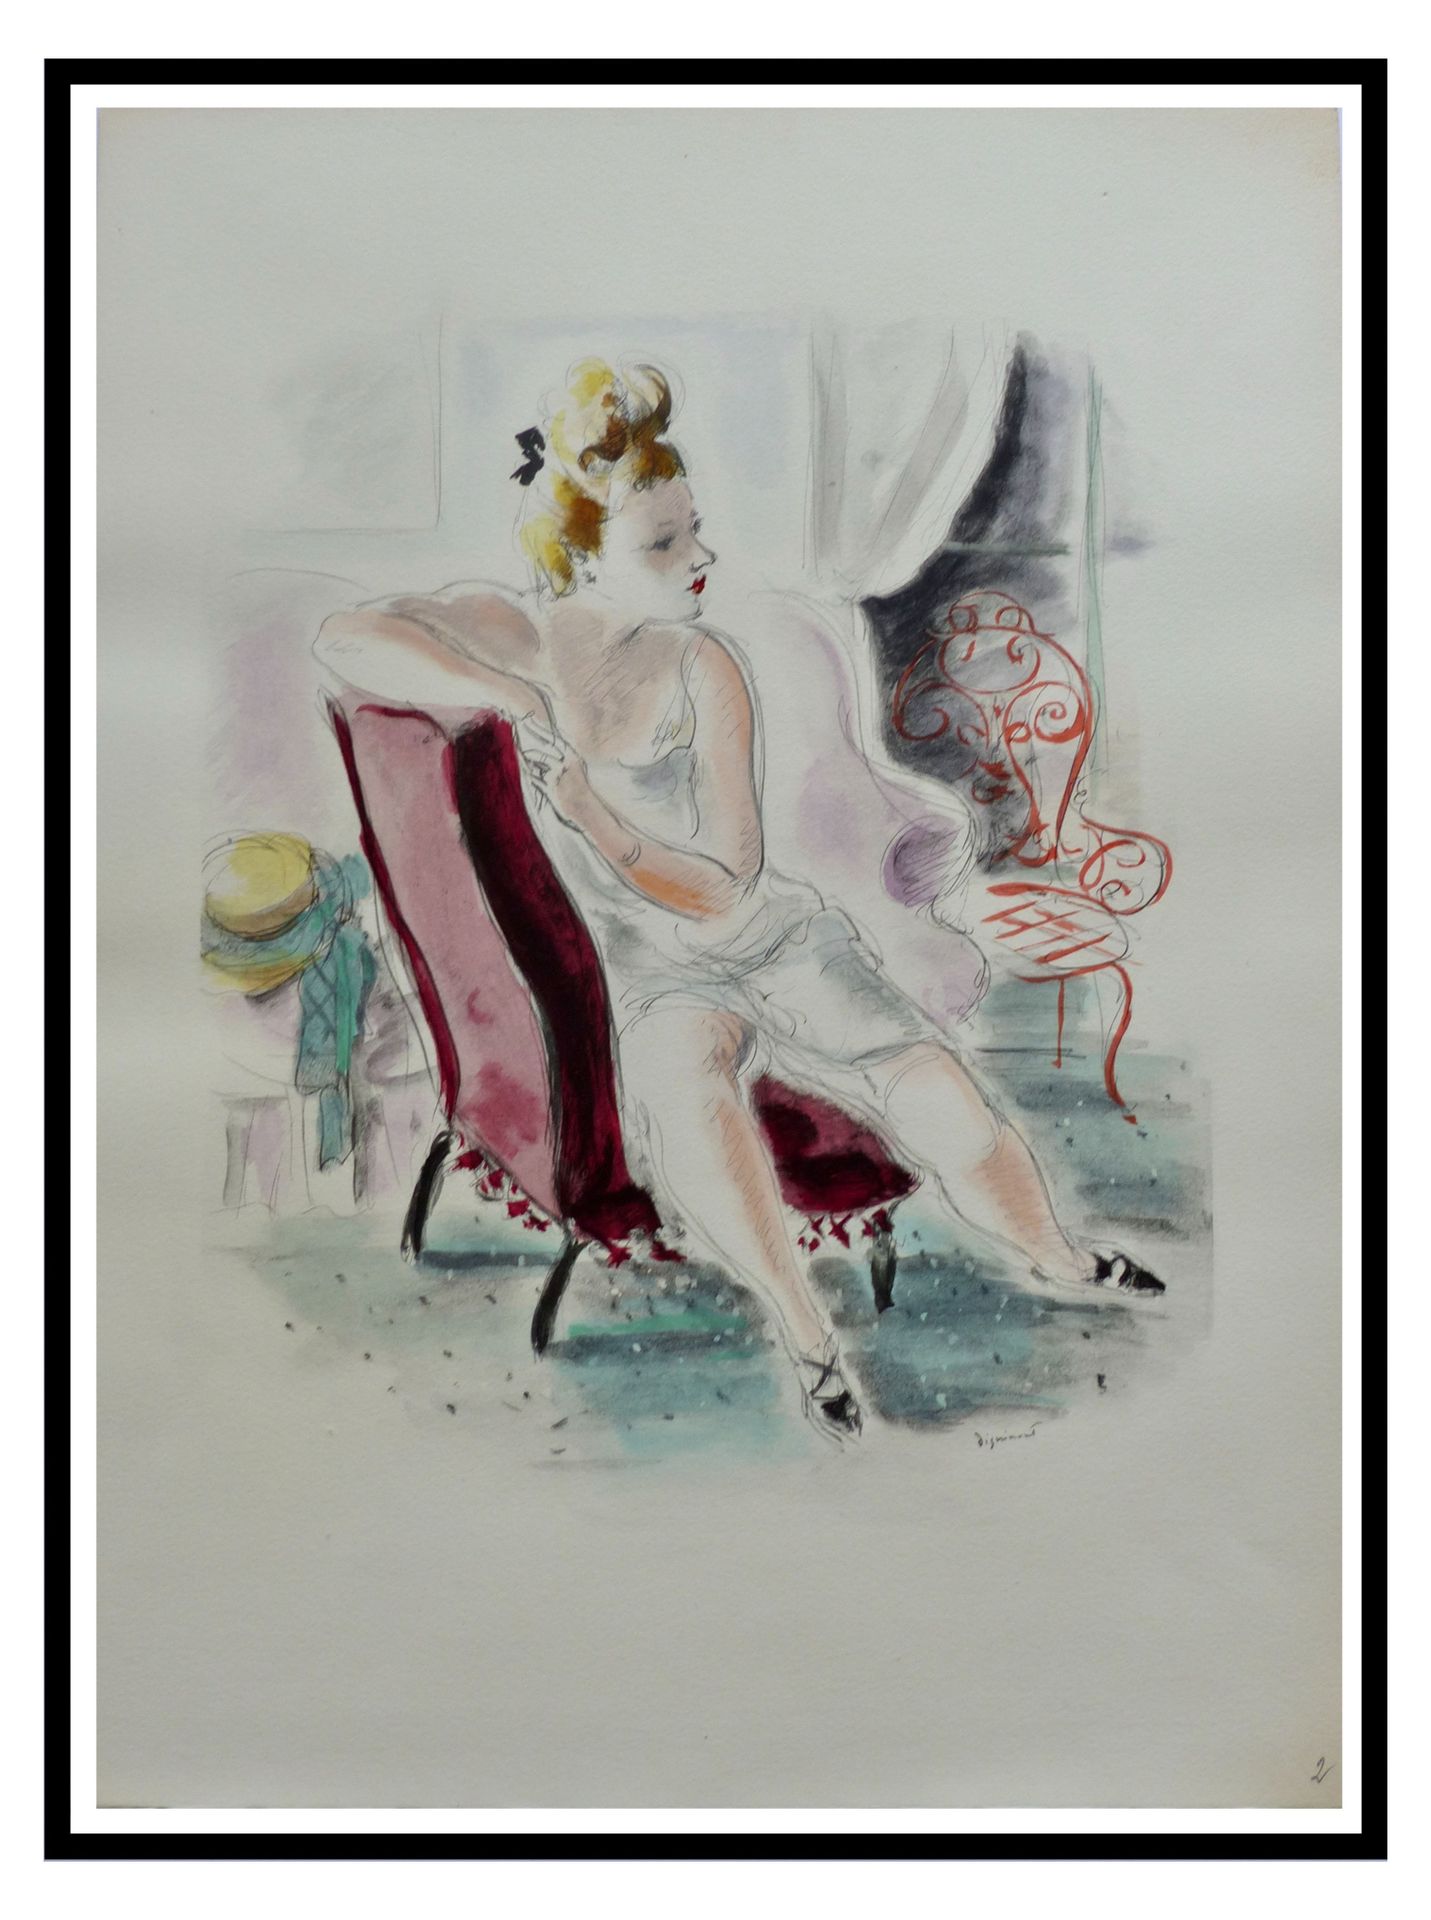 André DIGNIMONT 安德烈-迪尼蒙 (1891 - 1965)

红色扶手椅》，1946年

在盘子里签名的作品

安德烈-索雷版，蒙特卡洛

用V&hellip;